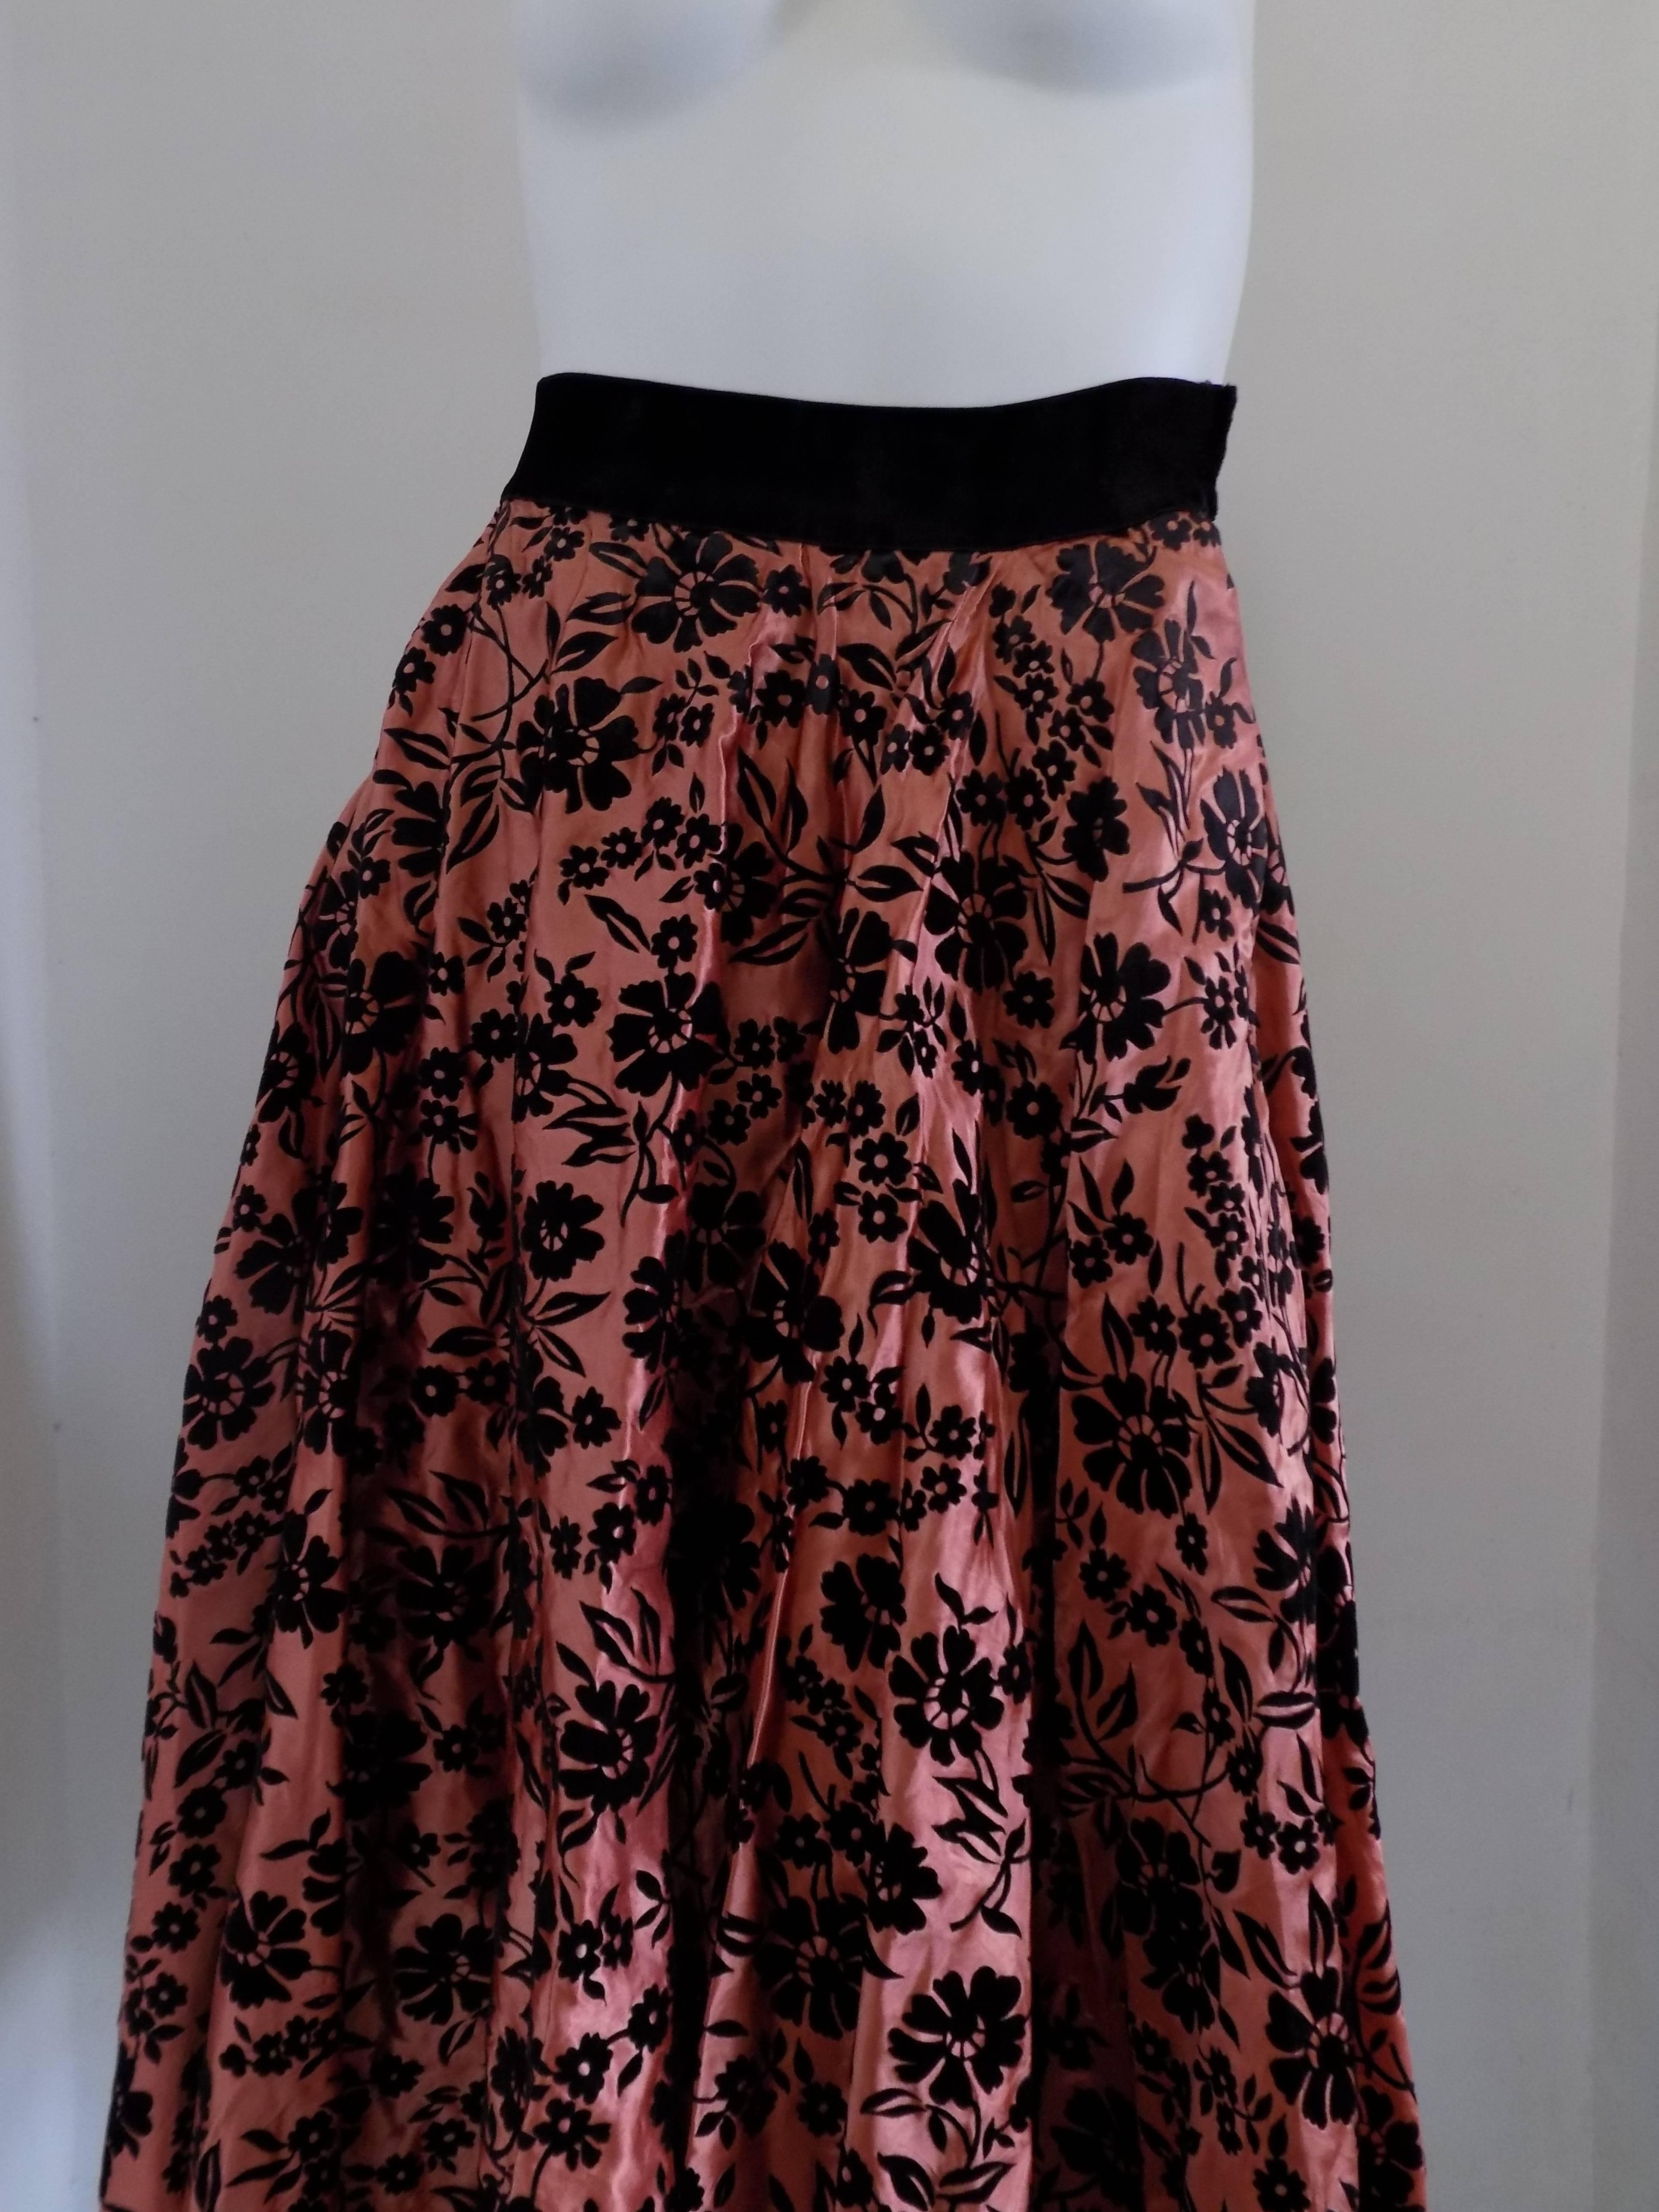 1980 Joe Davidson long skirt

Joe Davidson Original peach and black long skirt totally made in USA
Size M